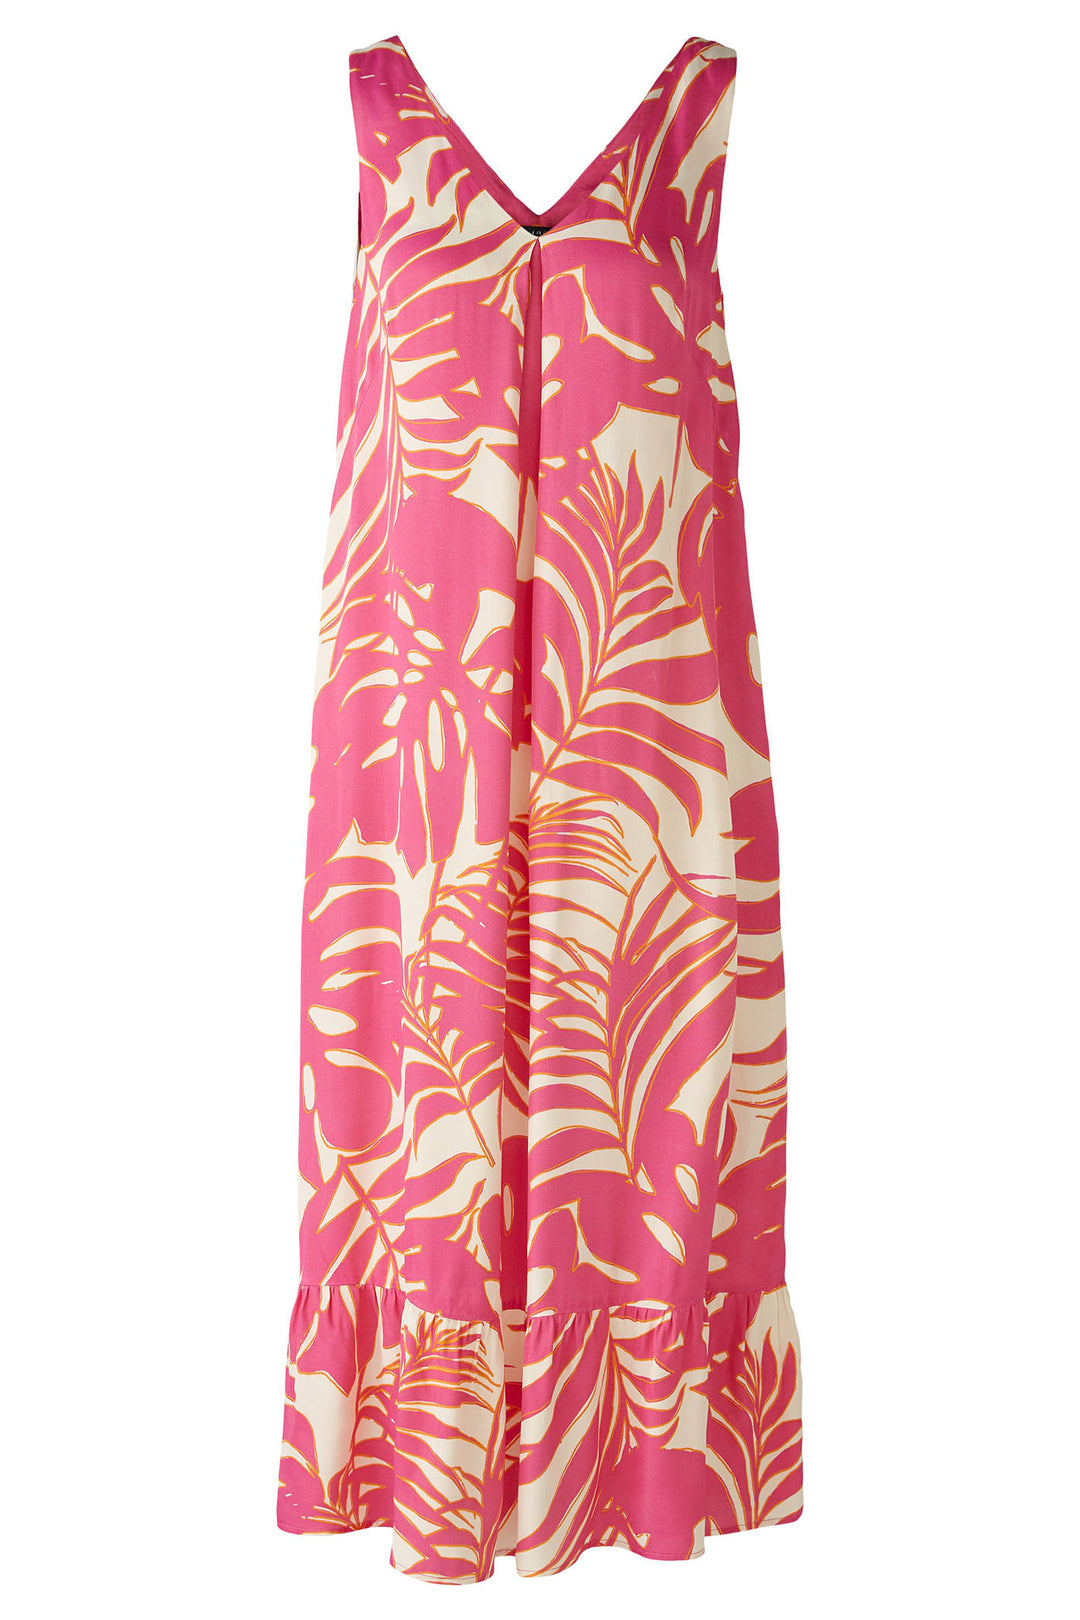 Oui 87549 Pink White Palm Print Sleeveless Dress - Olivia Grace Fashion